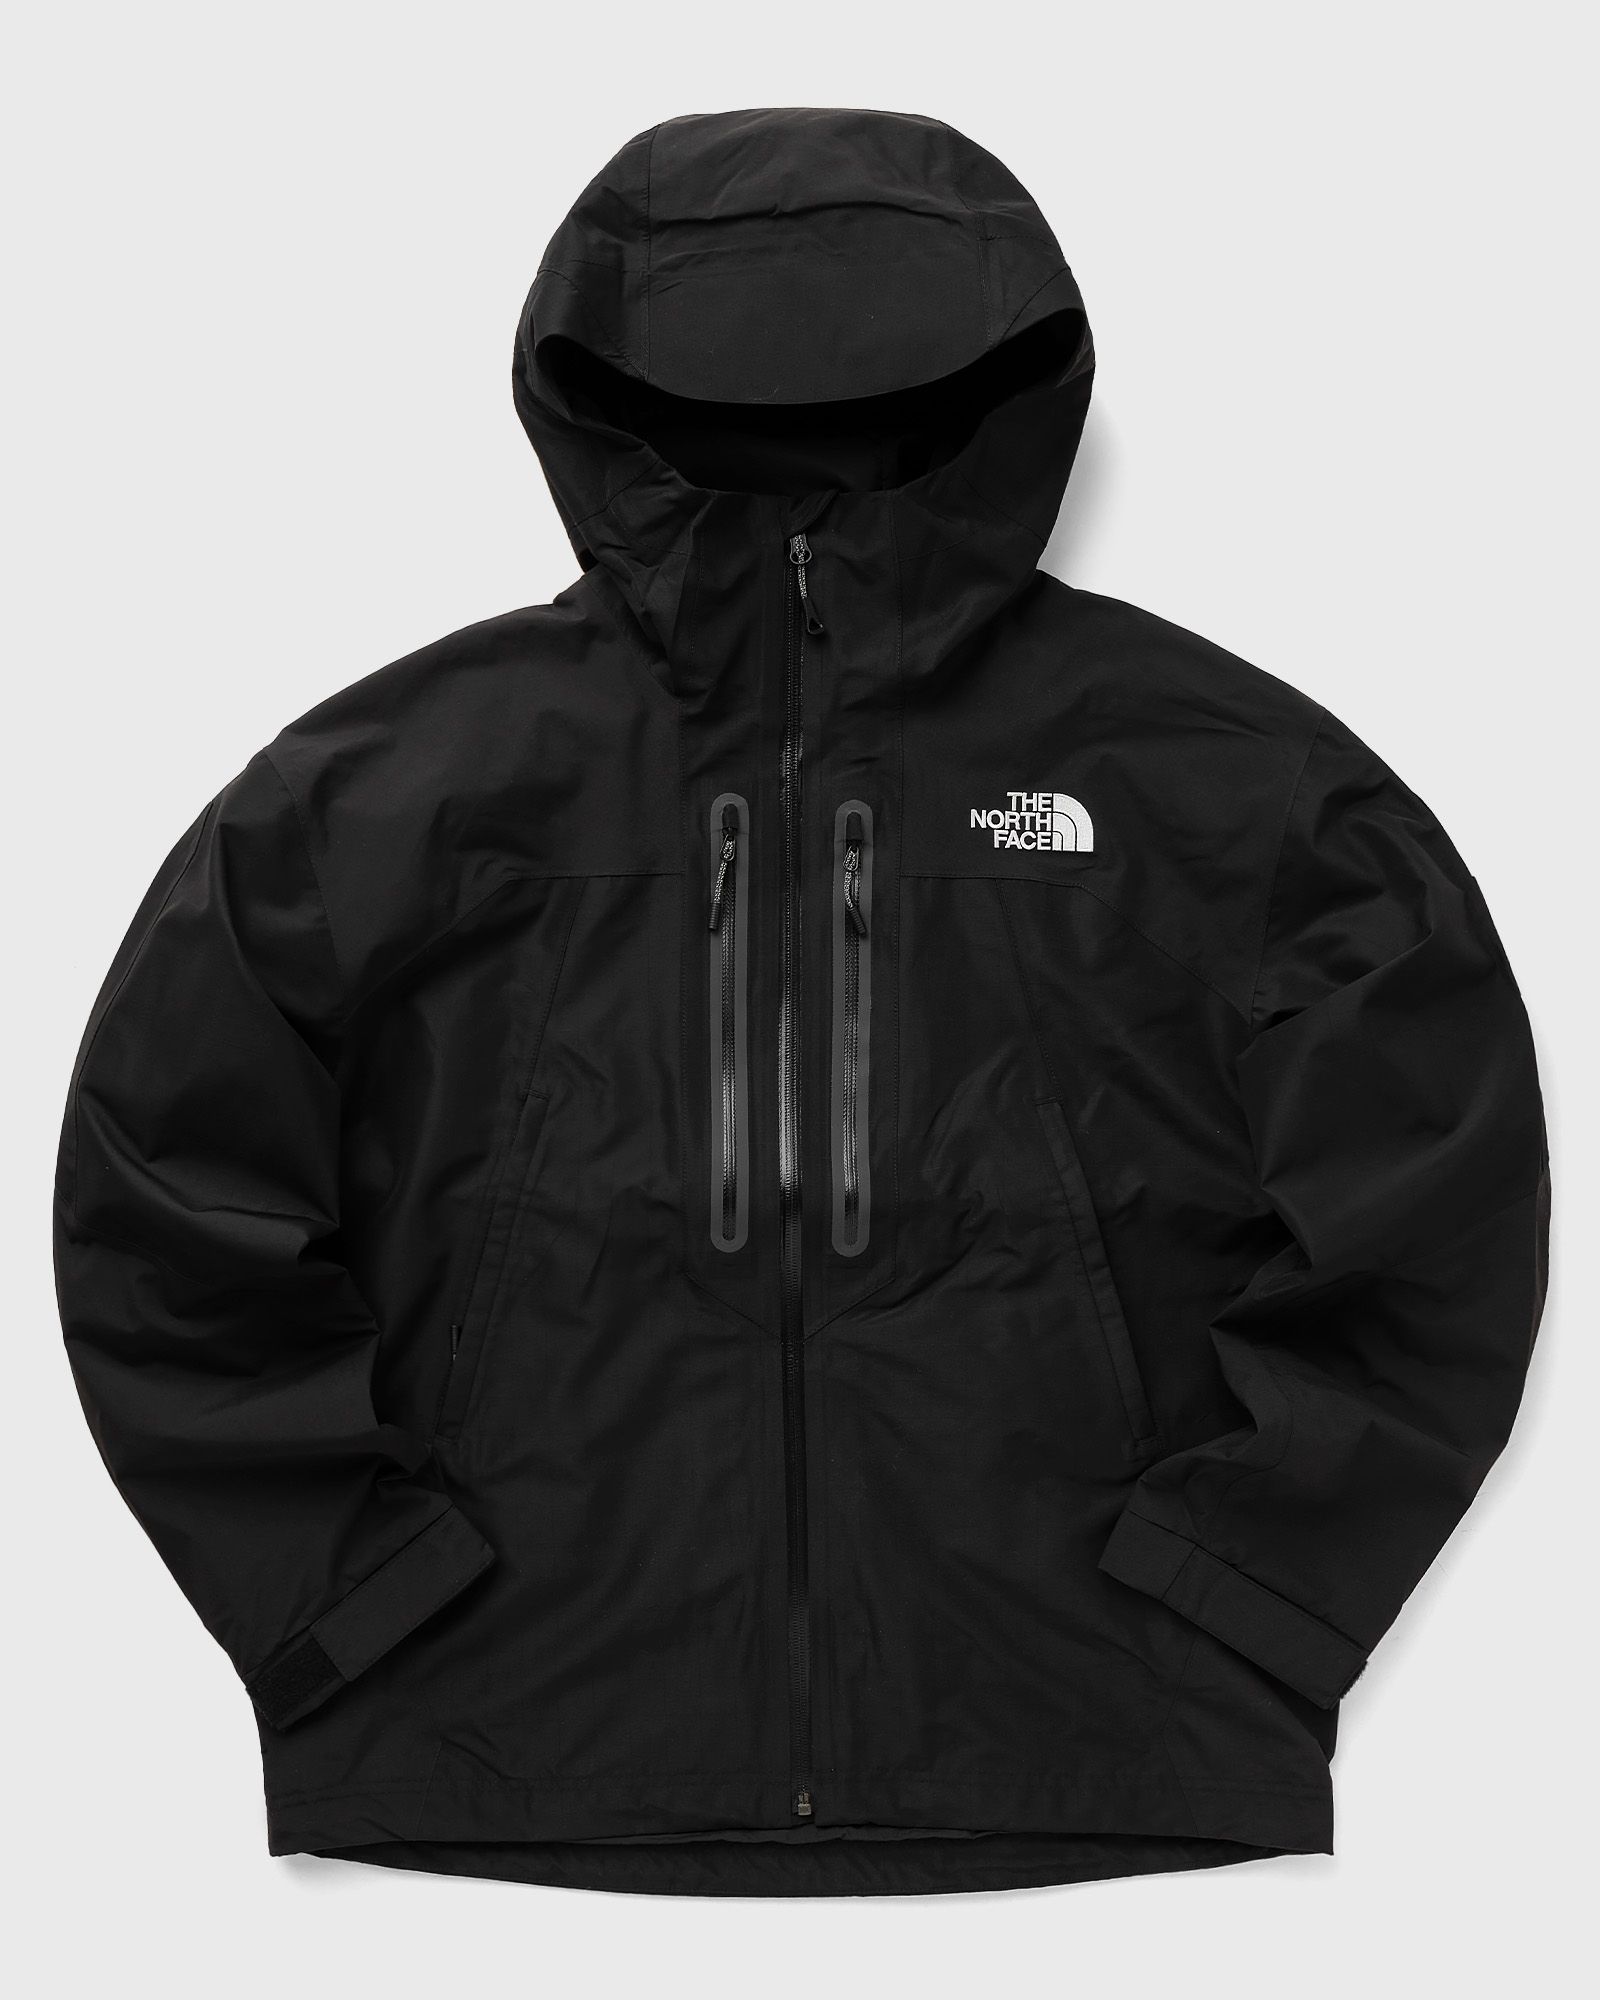 The North Face - transverse 2l dryvent jacket men shell jackets black in größe:l